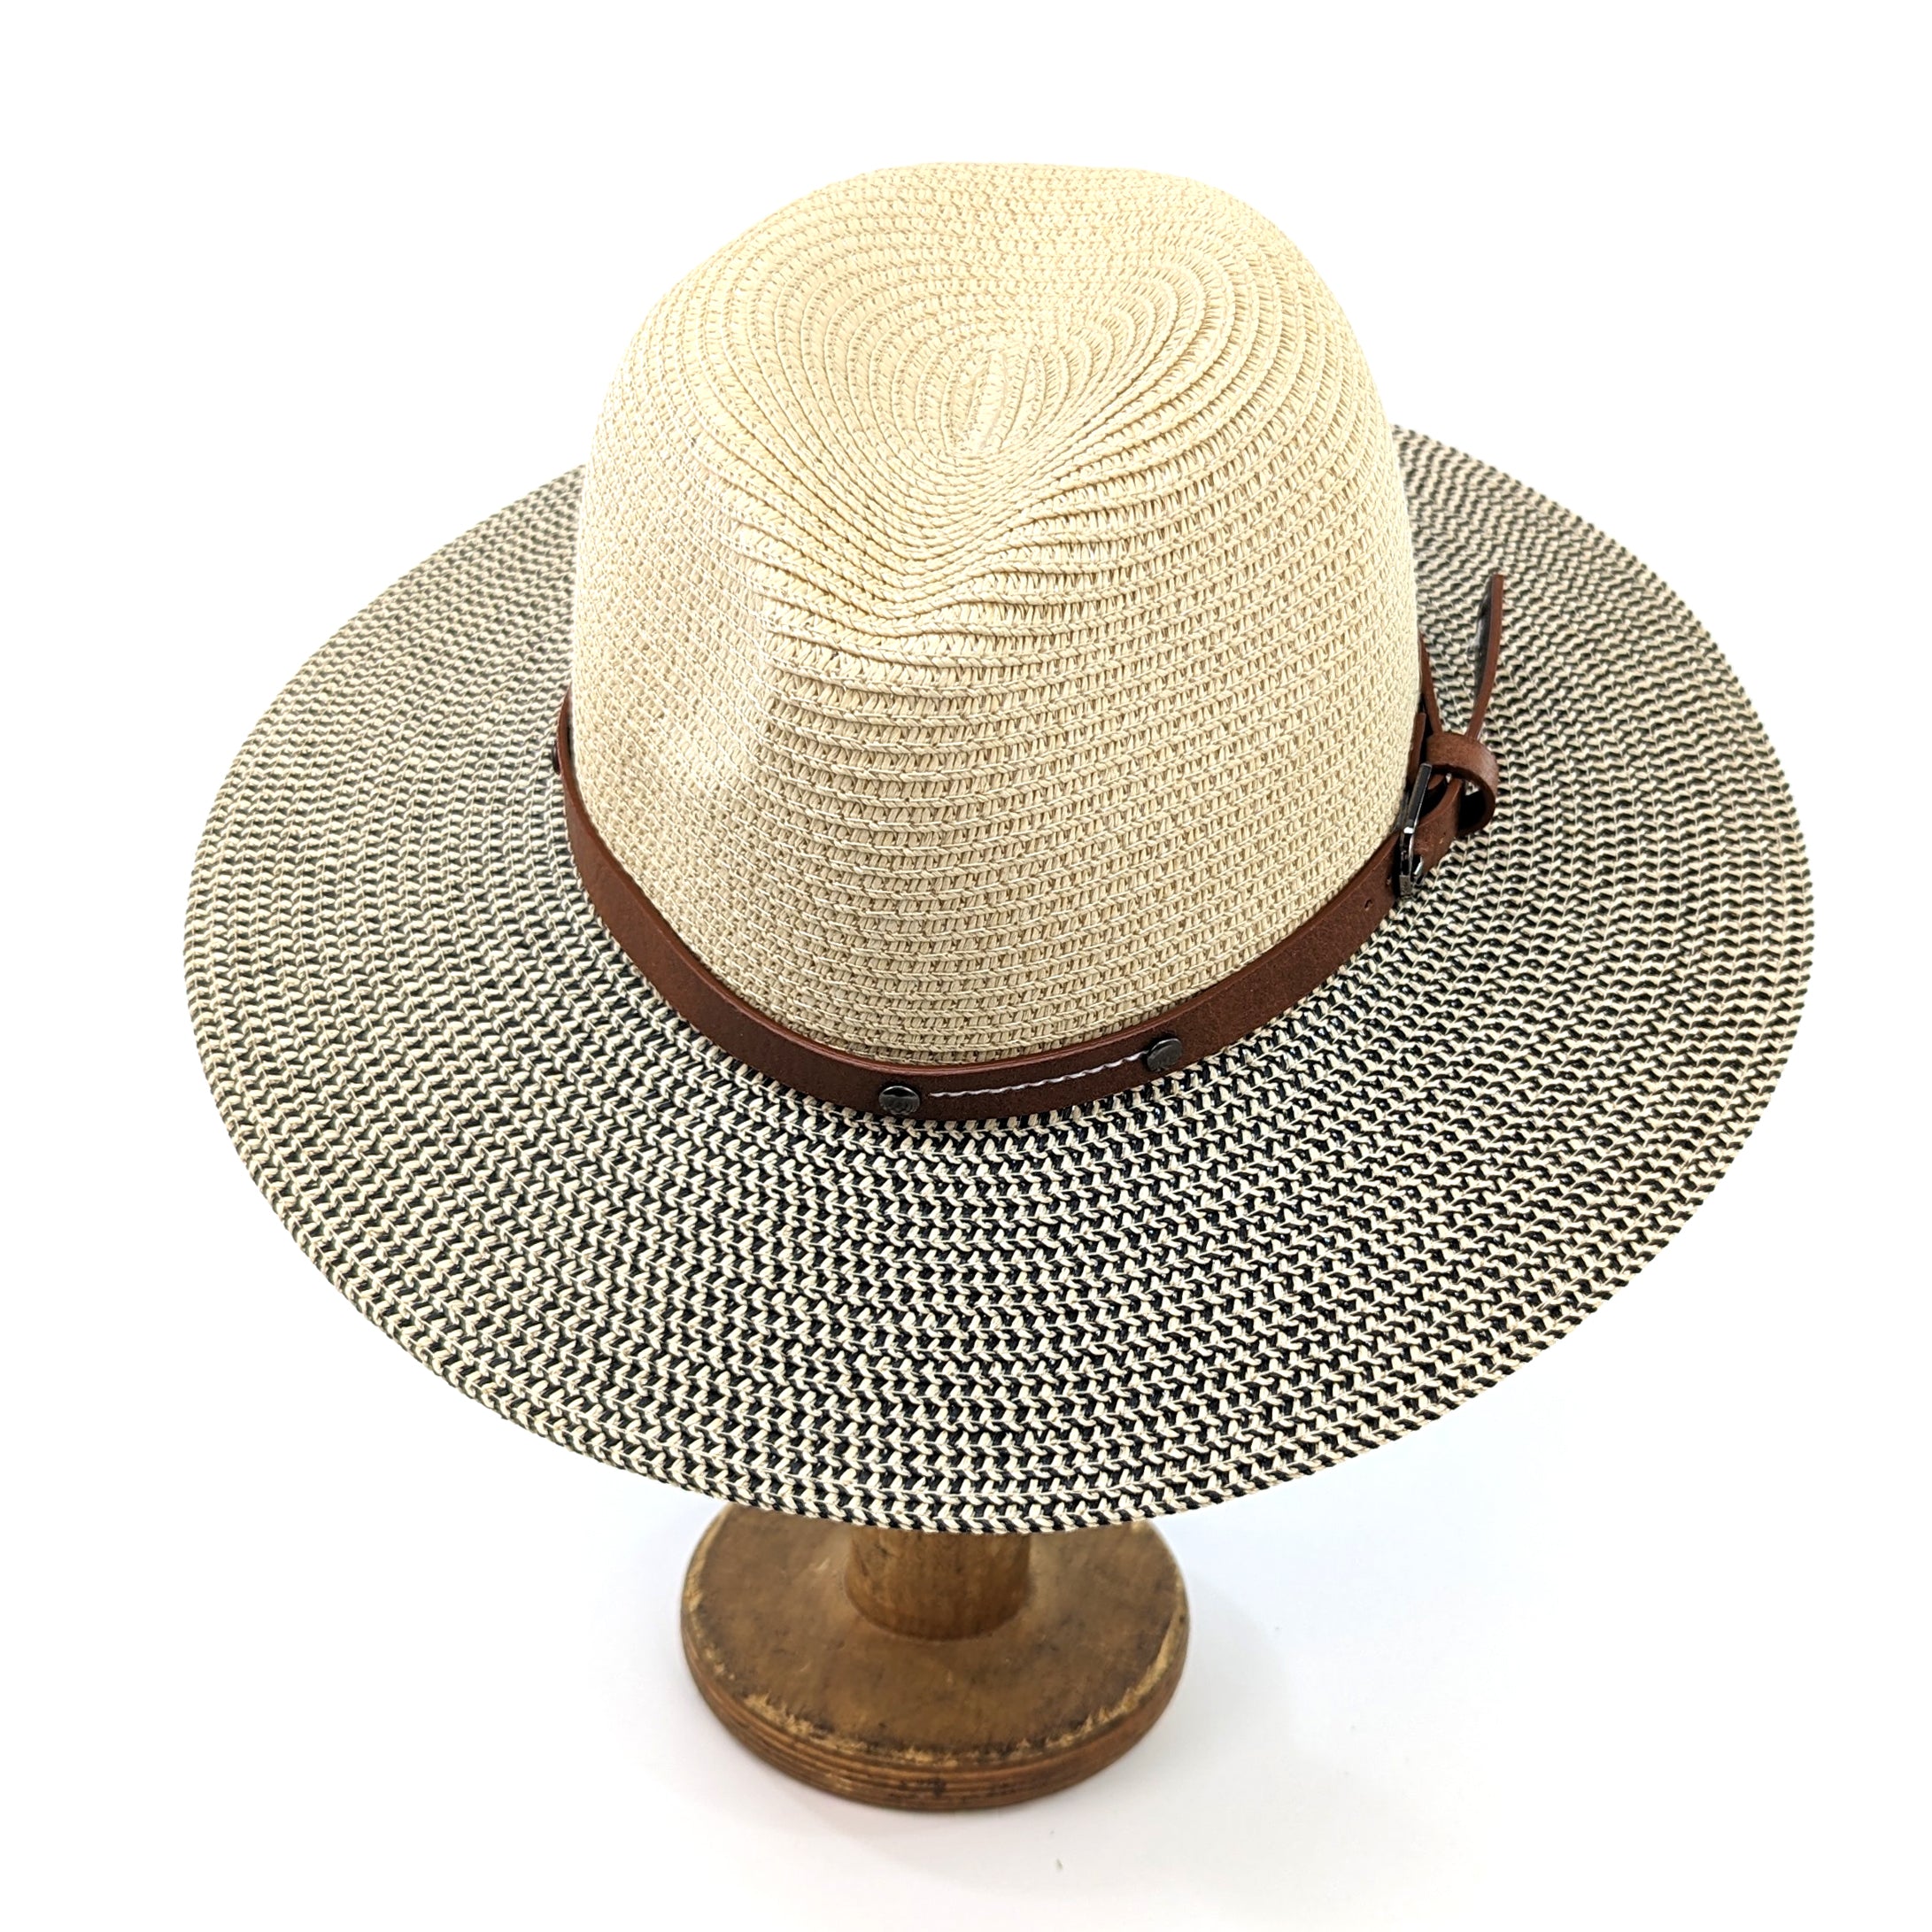 Folding Panama Style Travel Sun Hat - Mottled/Natural with Belt (57cm)